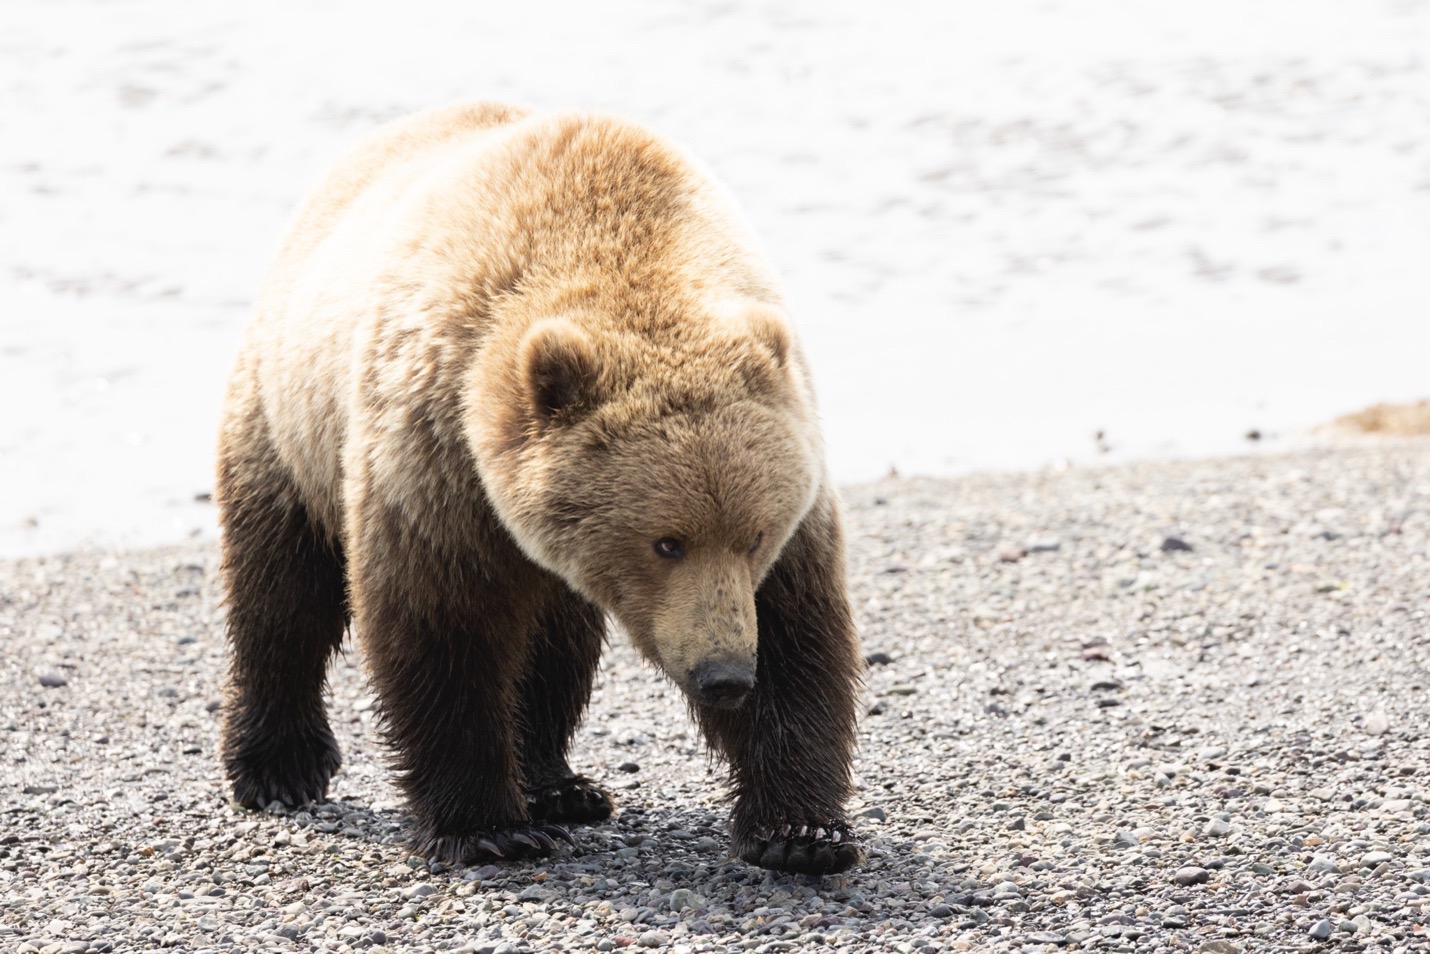 a brown bear pauses as it walks on a shoreline in Alaska